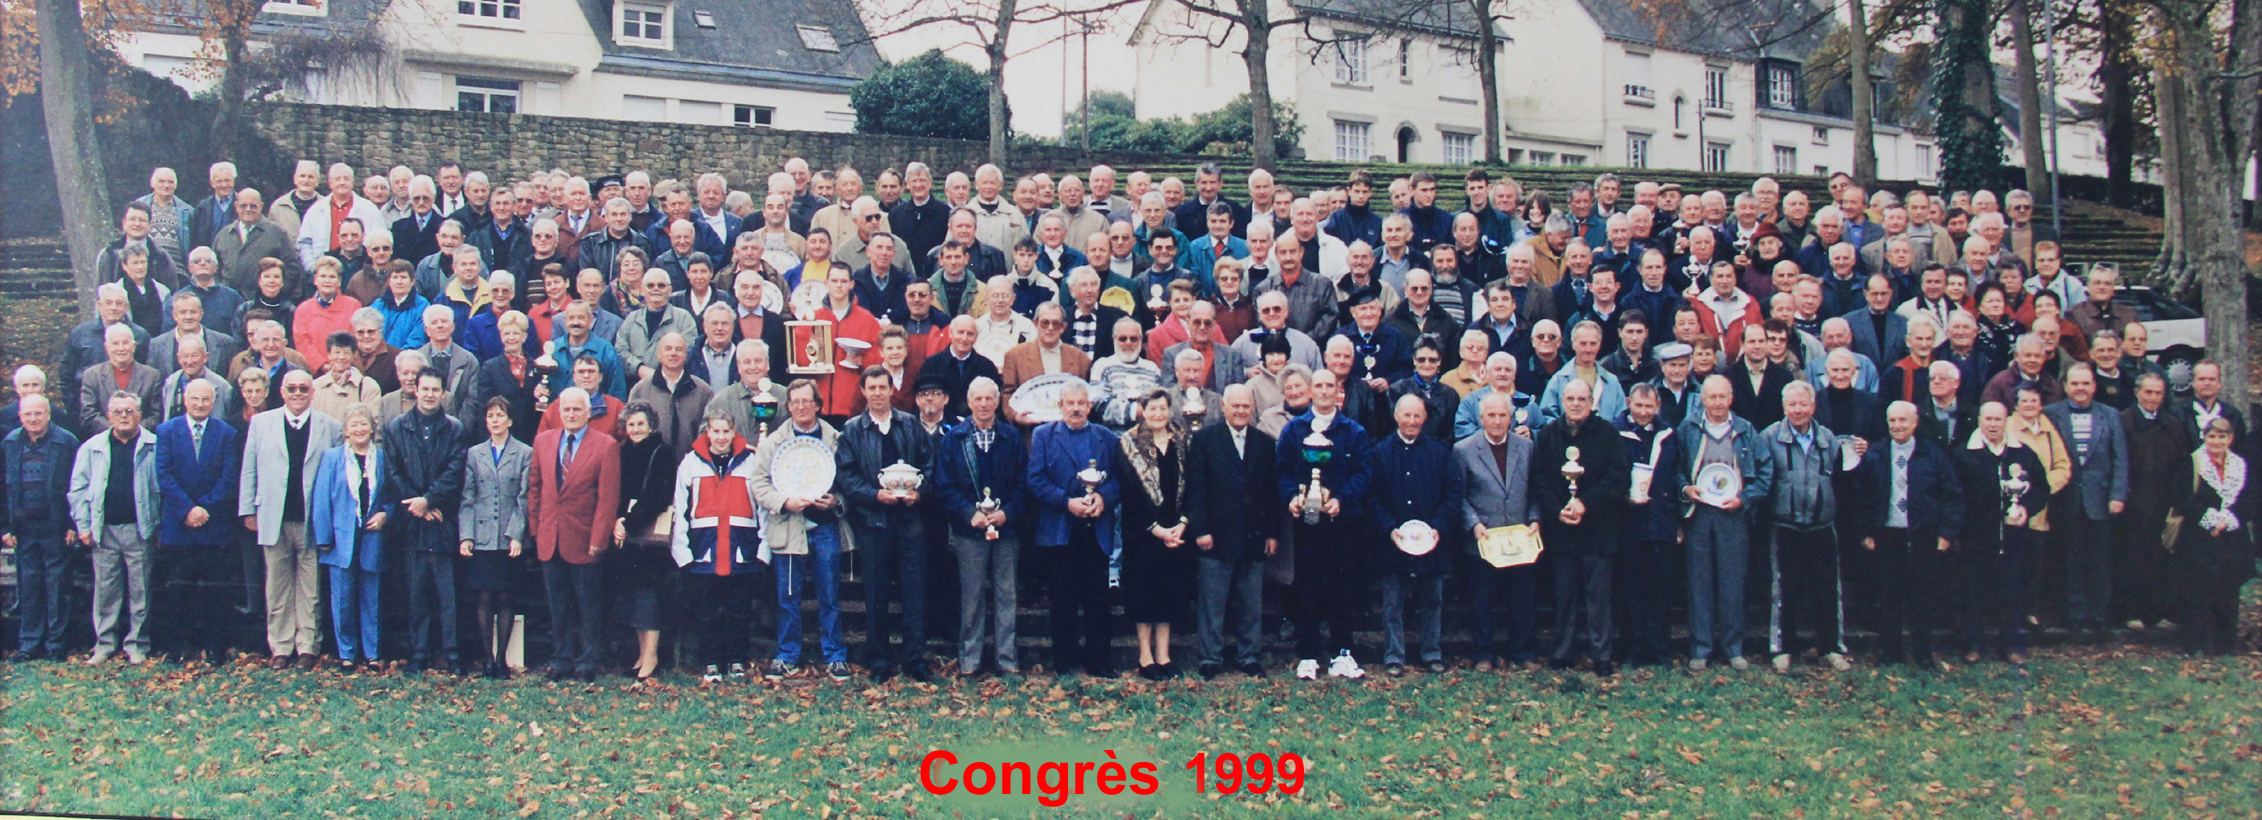 congrès 1999